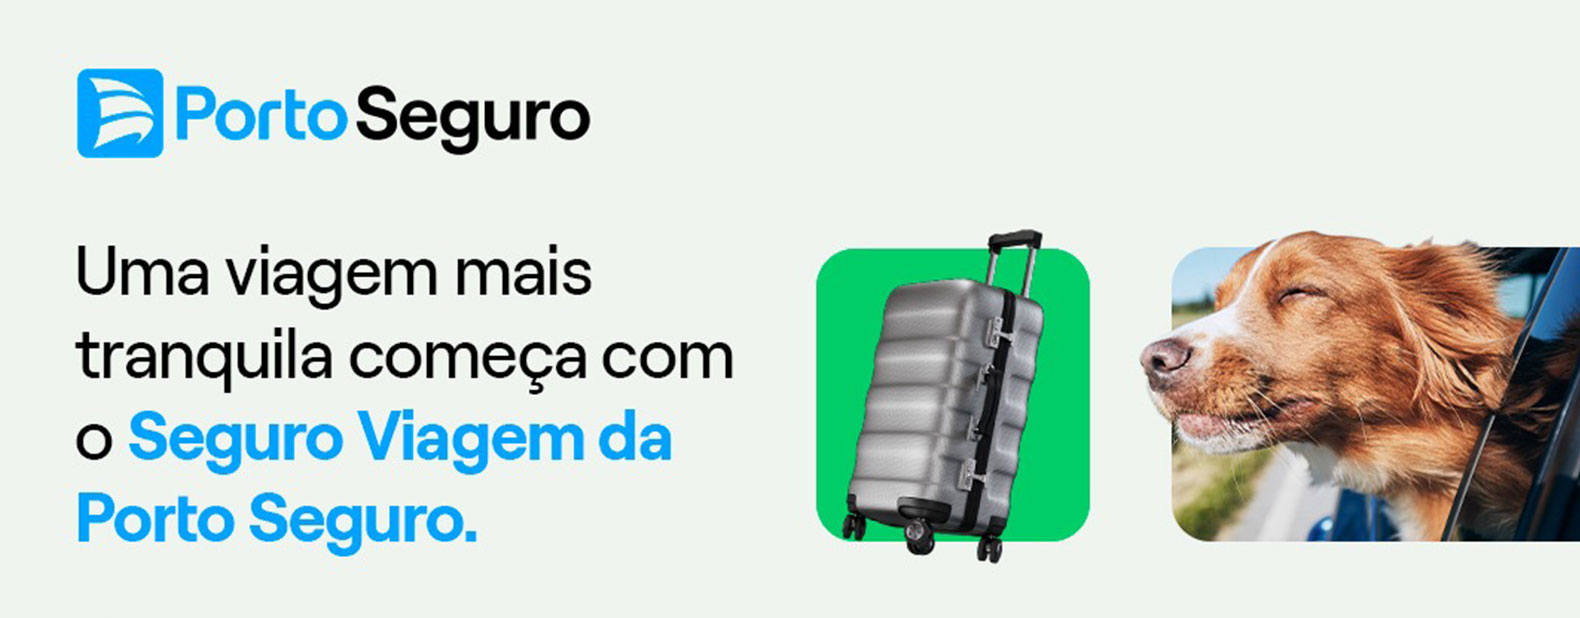 Seguro Viagens Porto Seguro - Corretora Presença - Sorocaba/SP